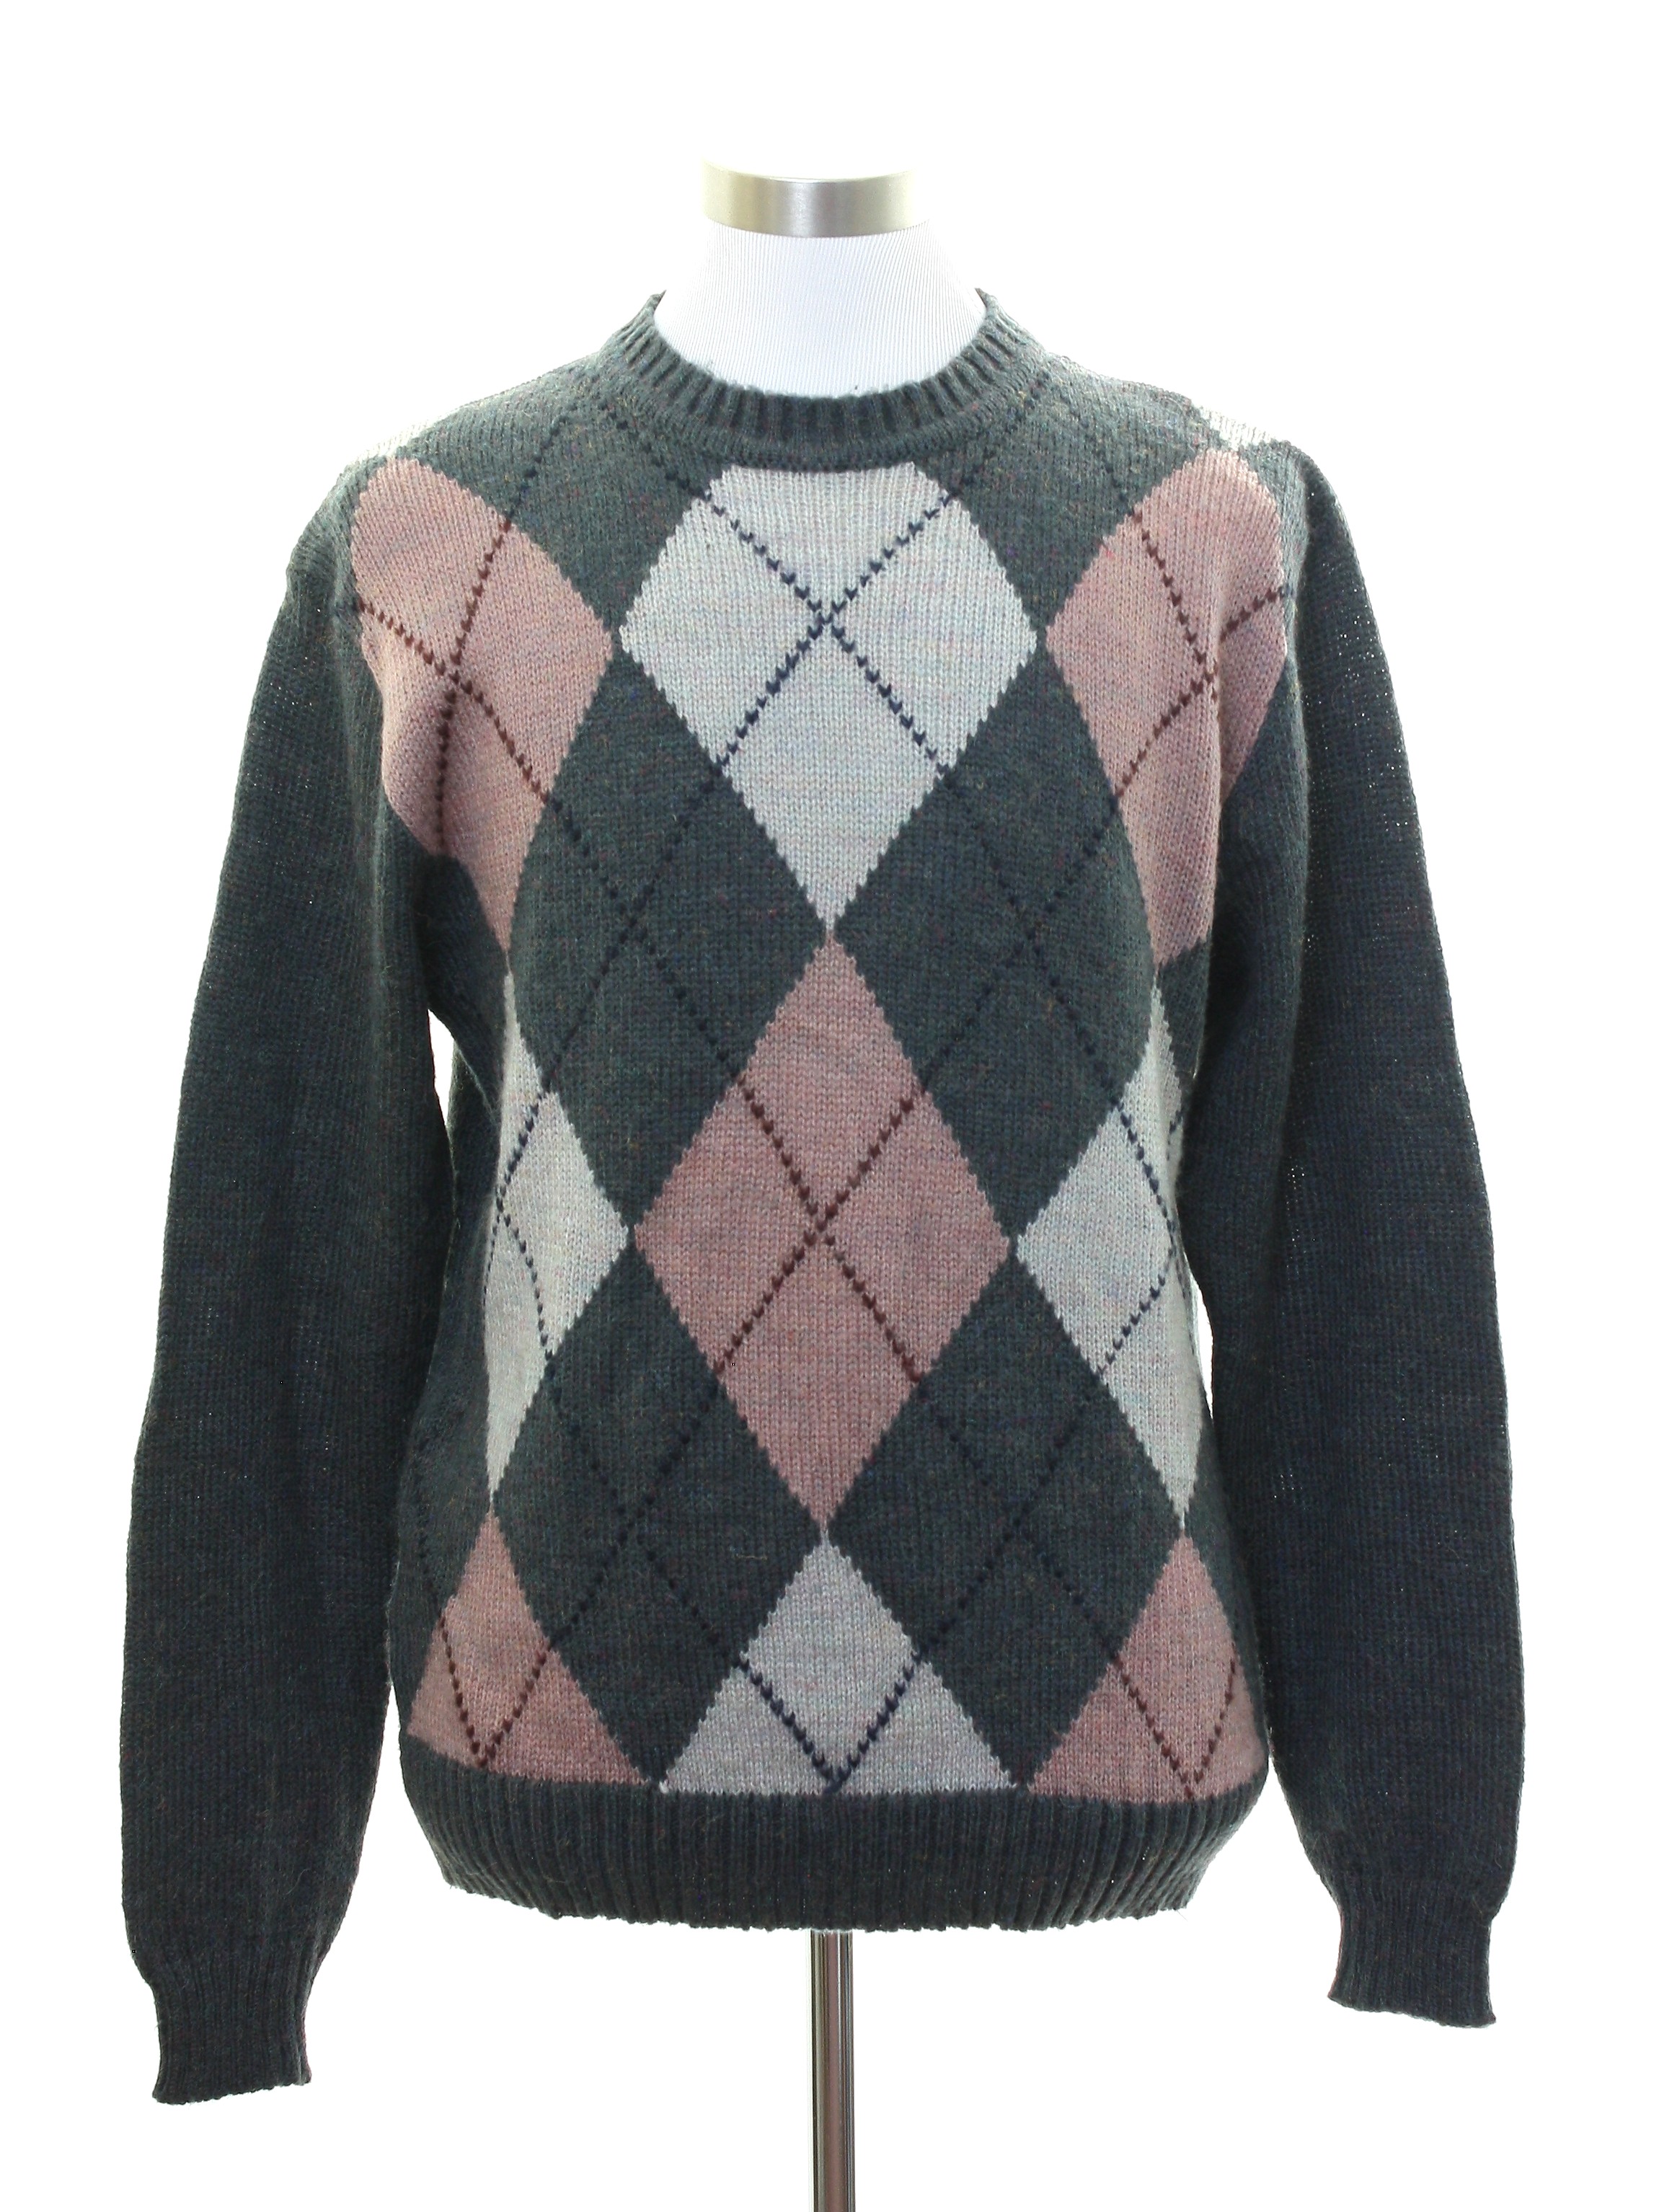 Nineties DG Garrison Sweater: Early 90s -DG Garrison- Mens dark gray ...